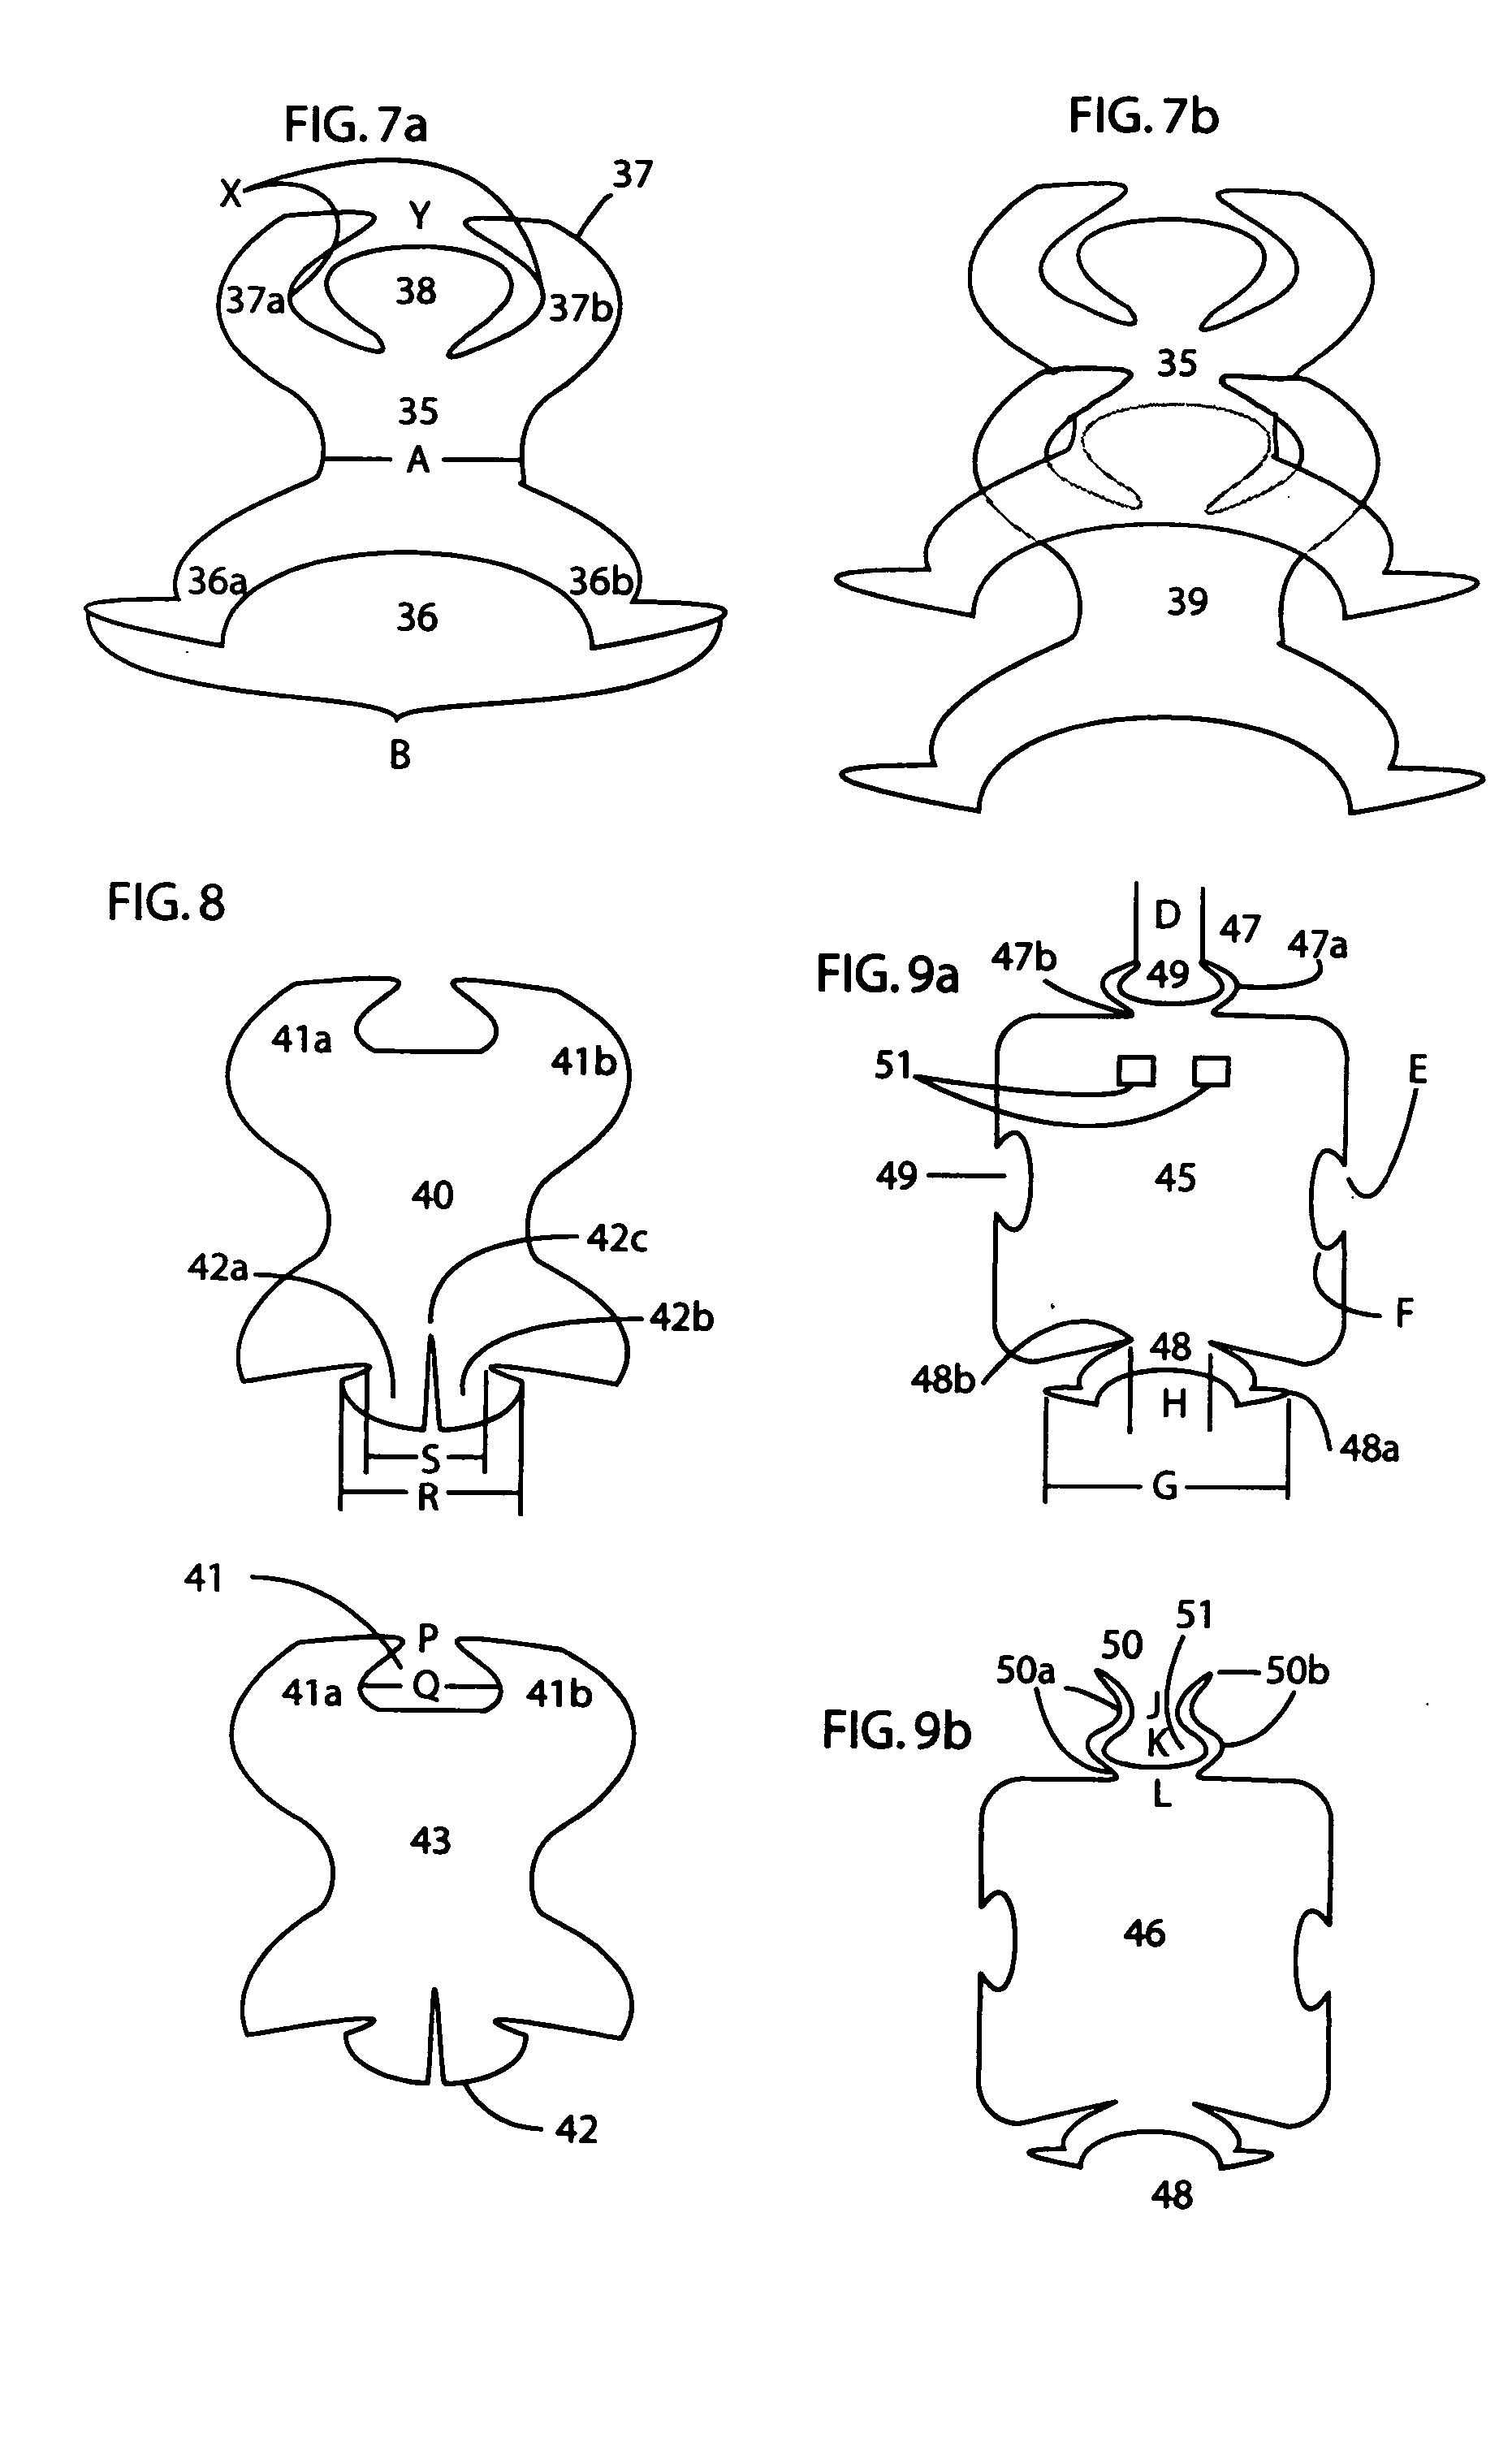 Universal disc-shaped connectors